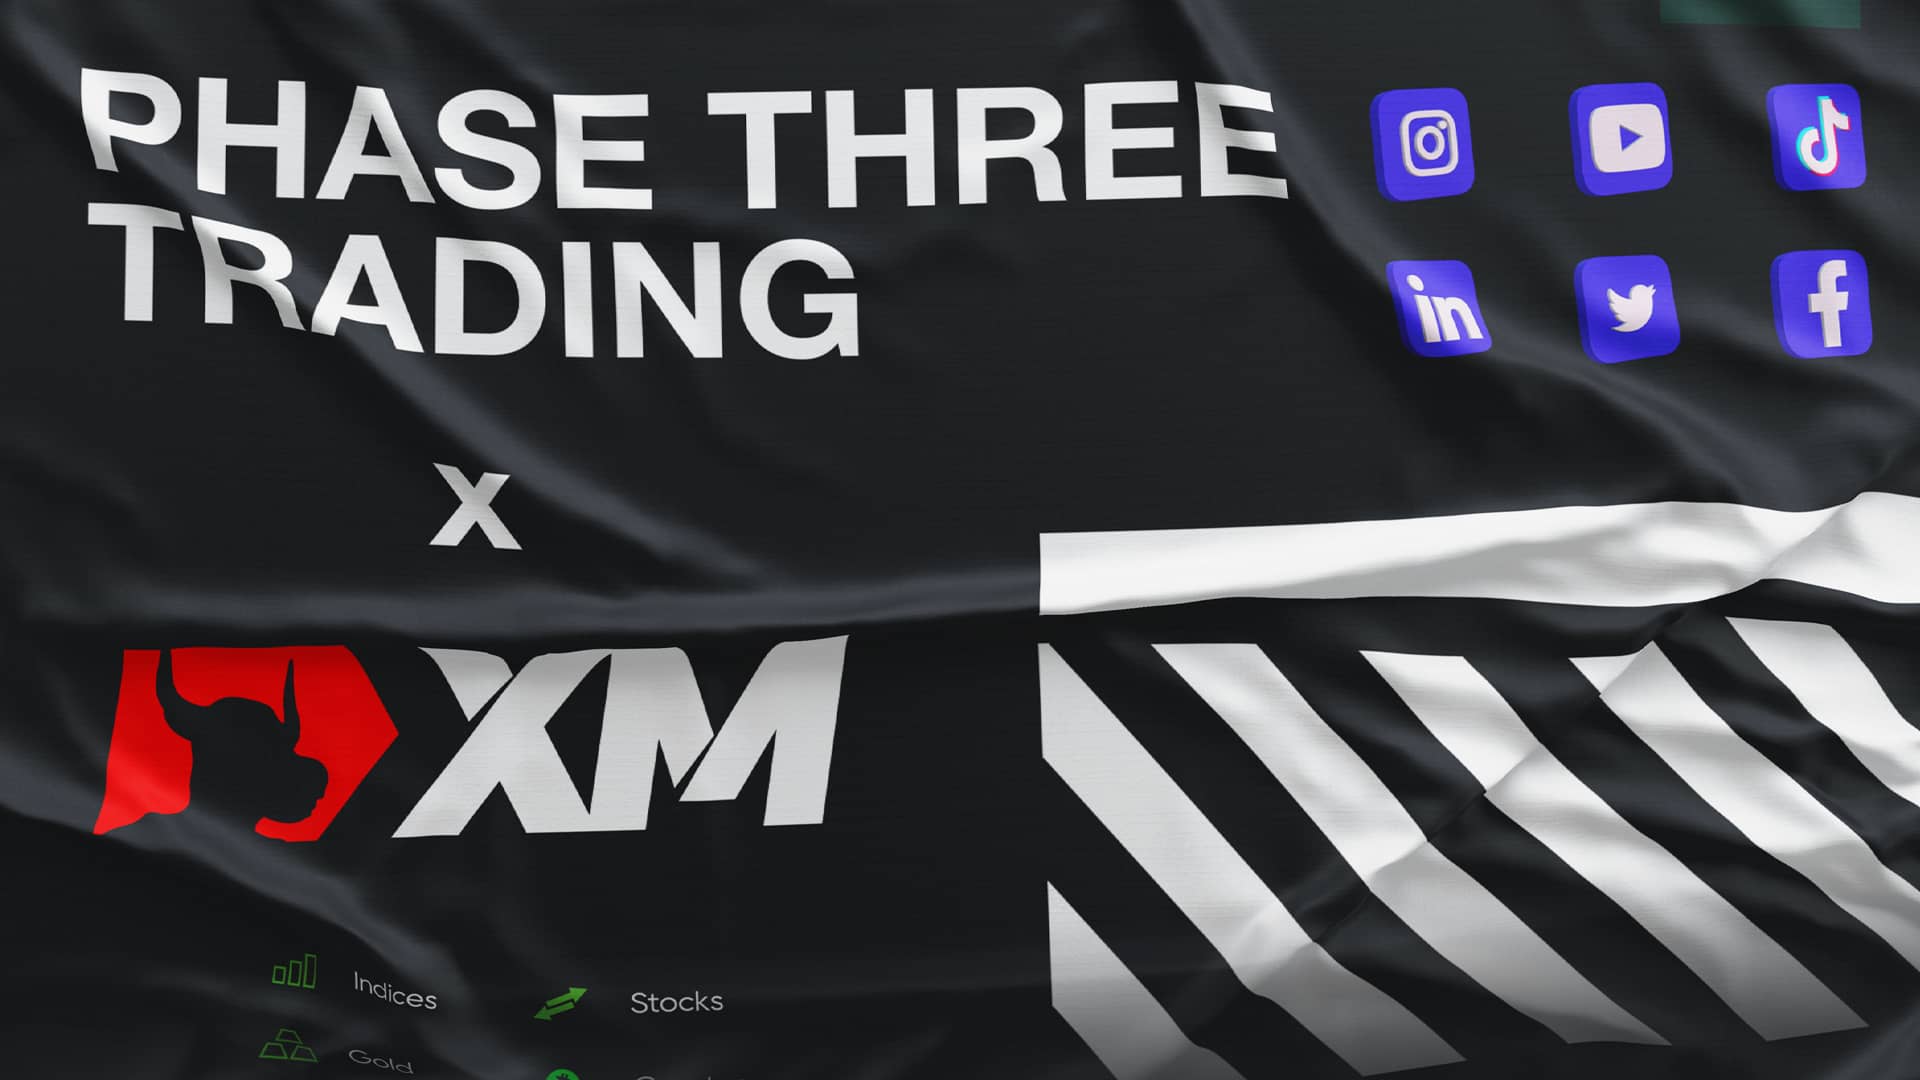 Phase Three Trading Partnership With XM Global